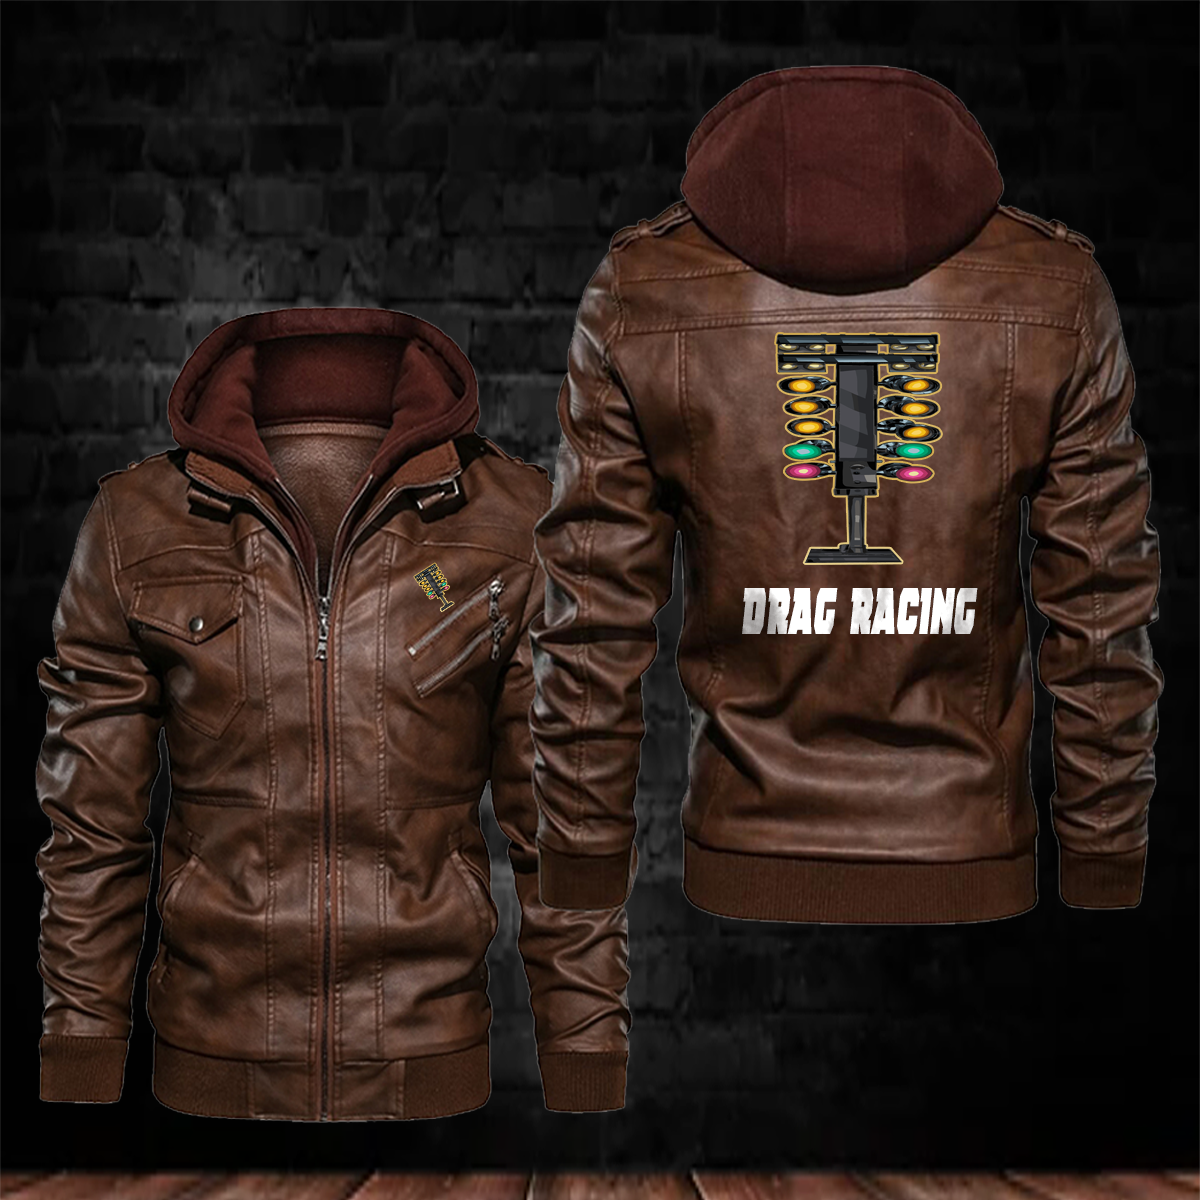 Drag Racing leather jacket